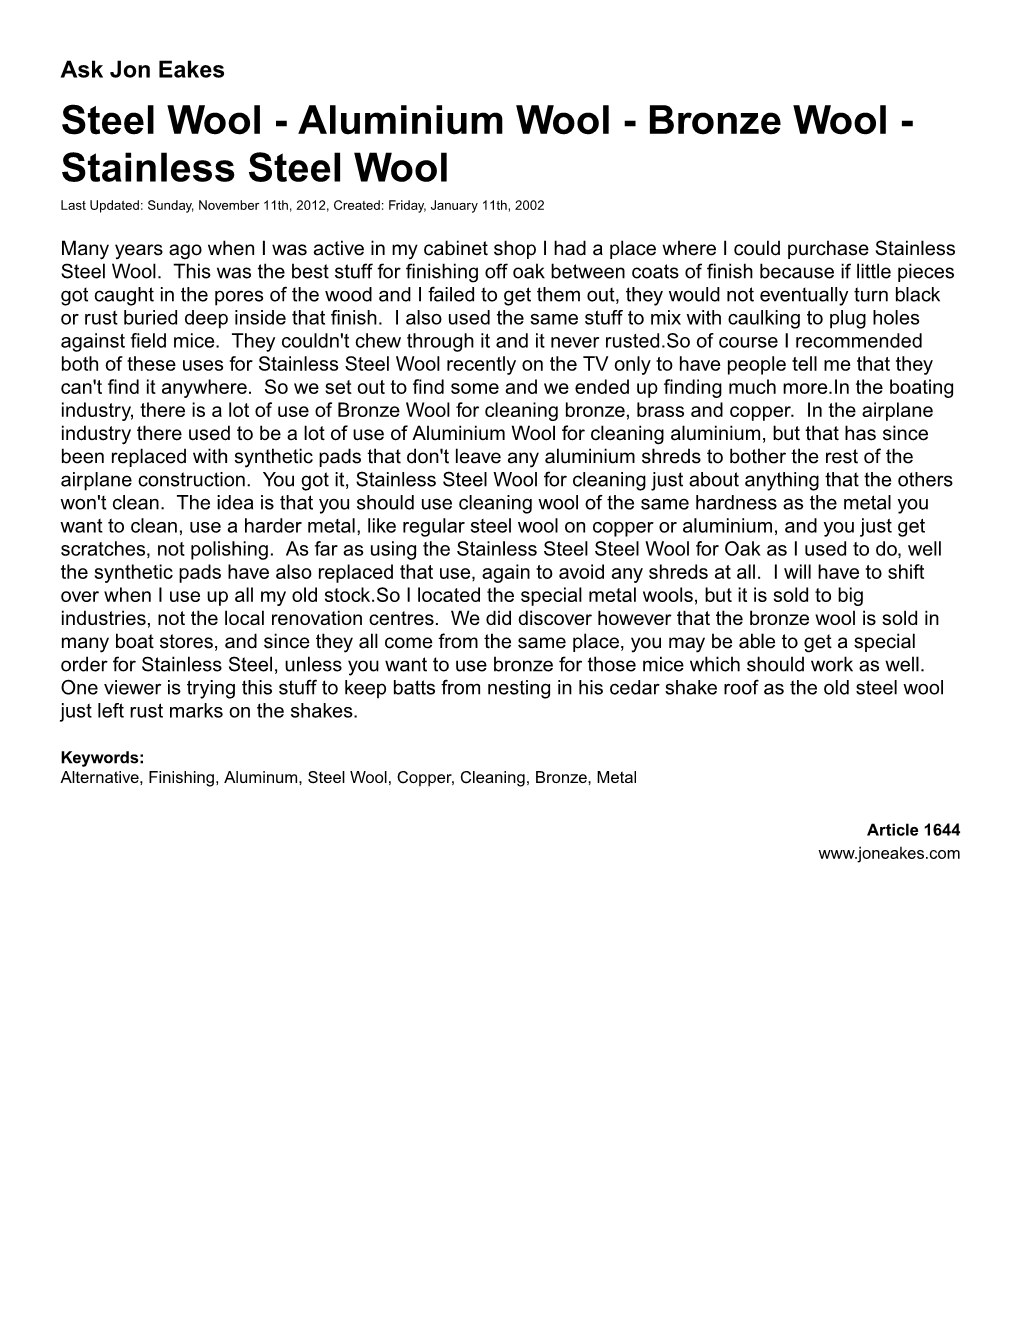 Steel Wool - Aluminium Wool - Bronze Wool - Stainless Steel Wool Last Updated: Sunday, November 11Th, 2012, Created: Friday, January 11Th, 2002